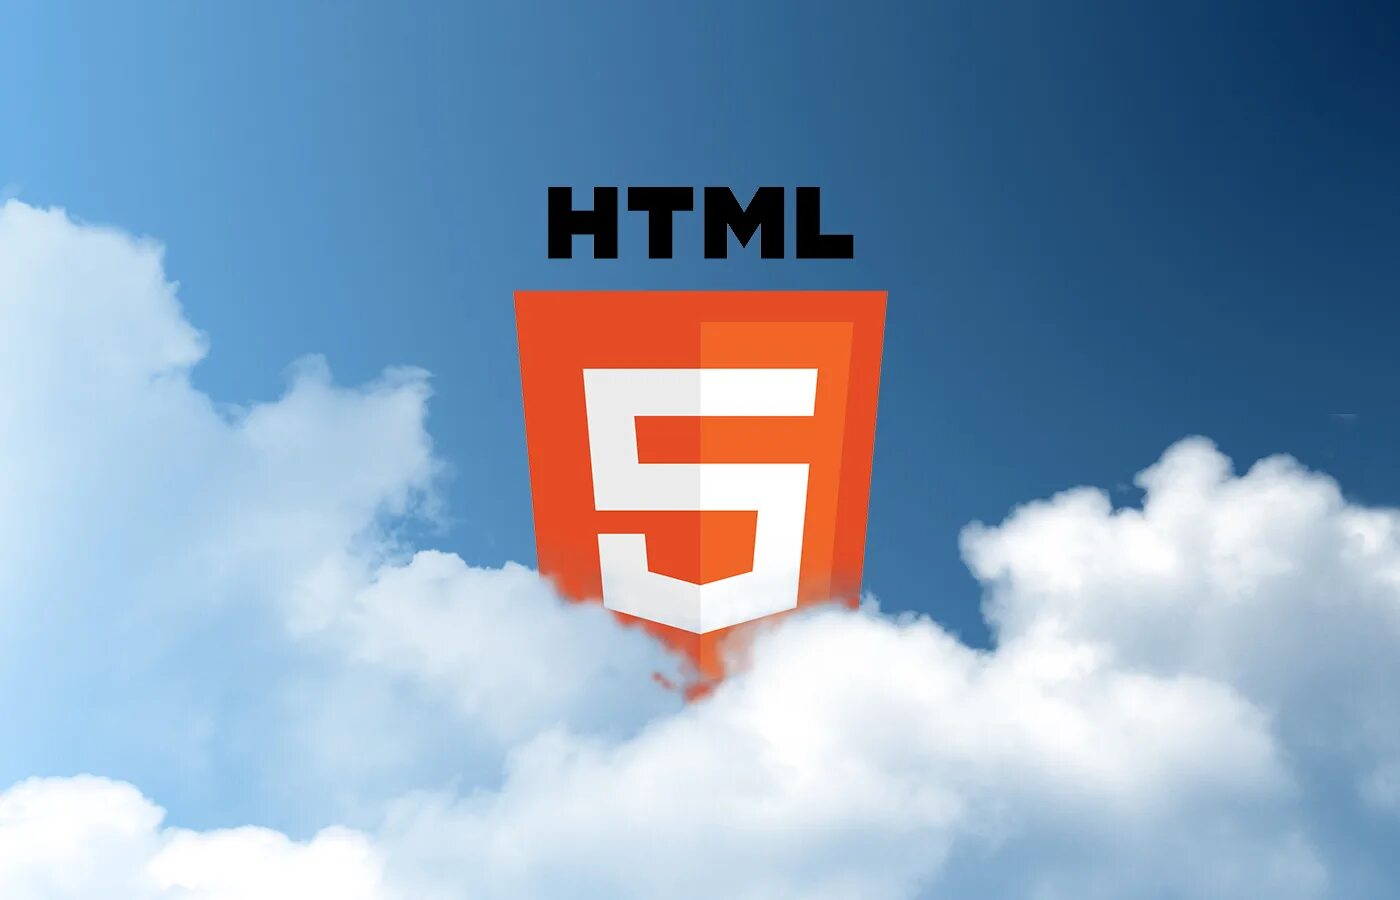 Html5 web. Html. Html5 лого. Картинка html. Значок html5.